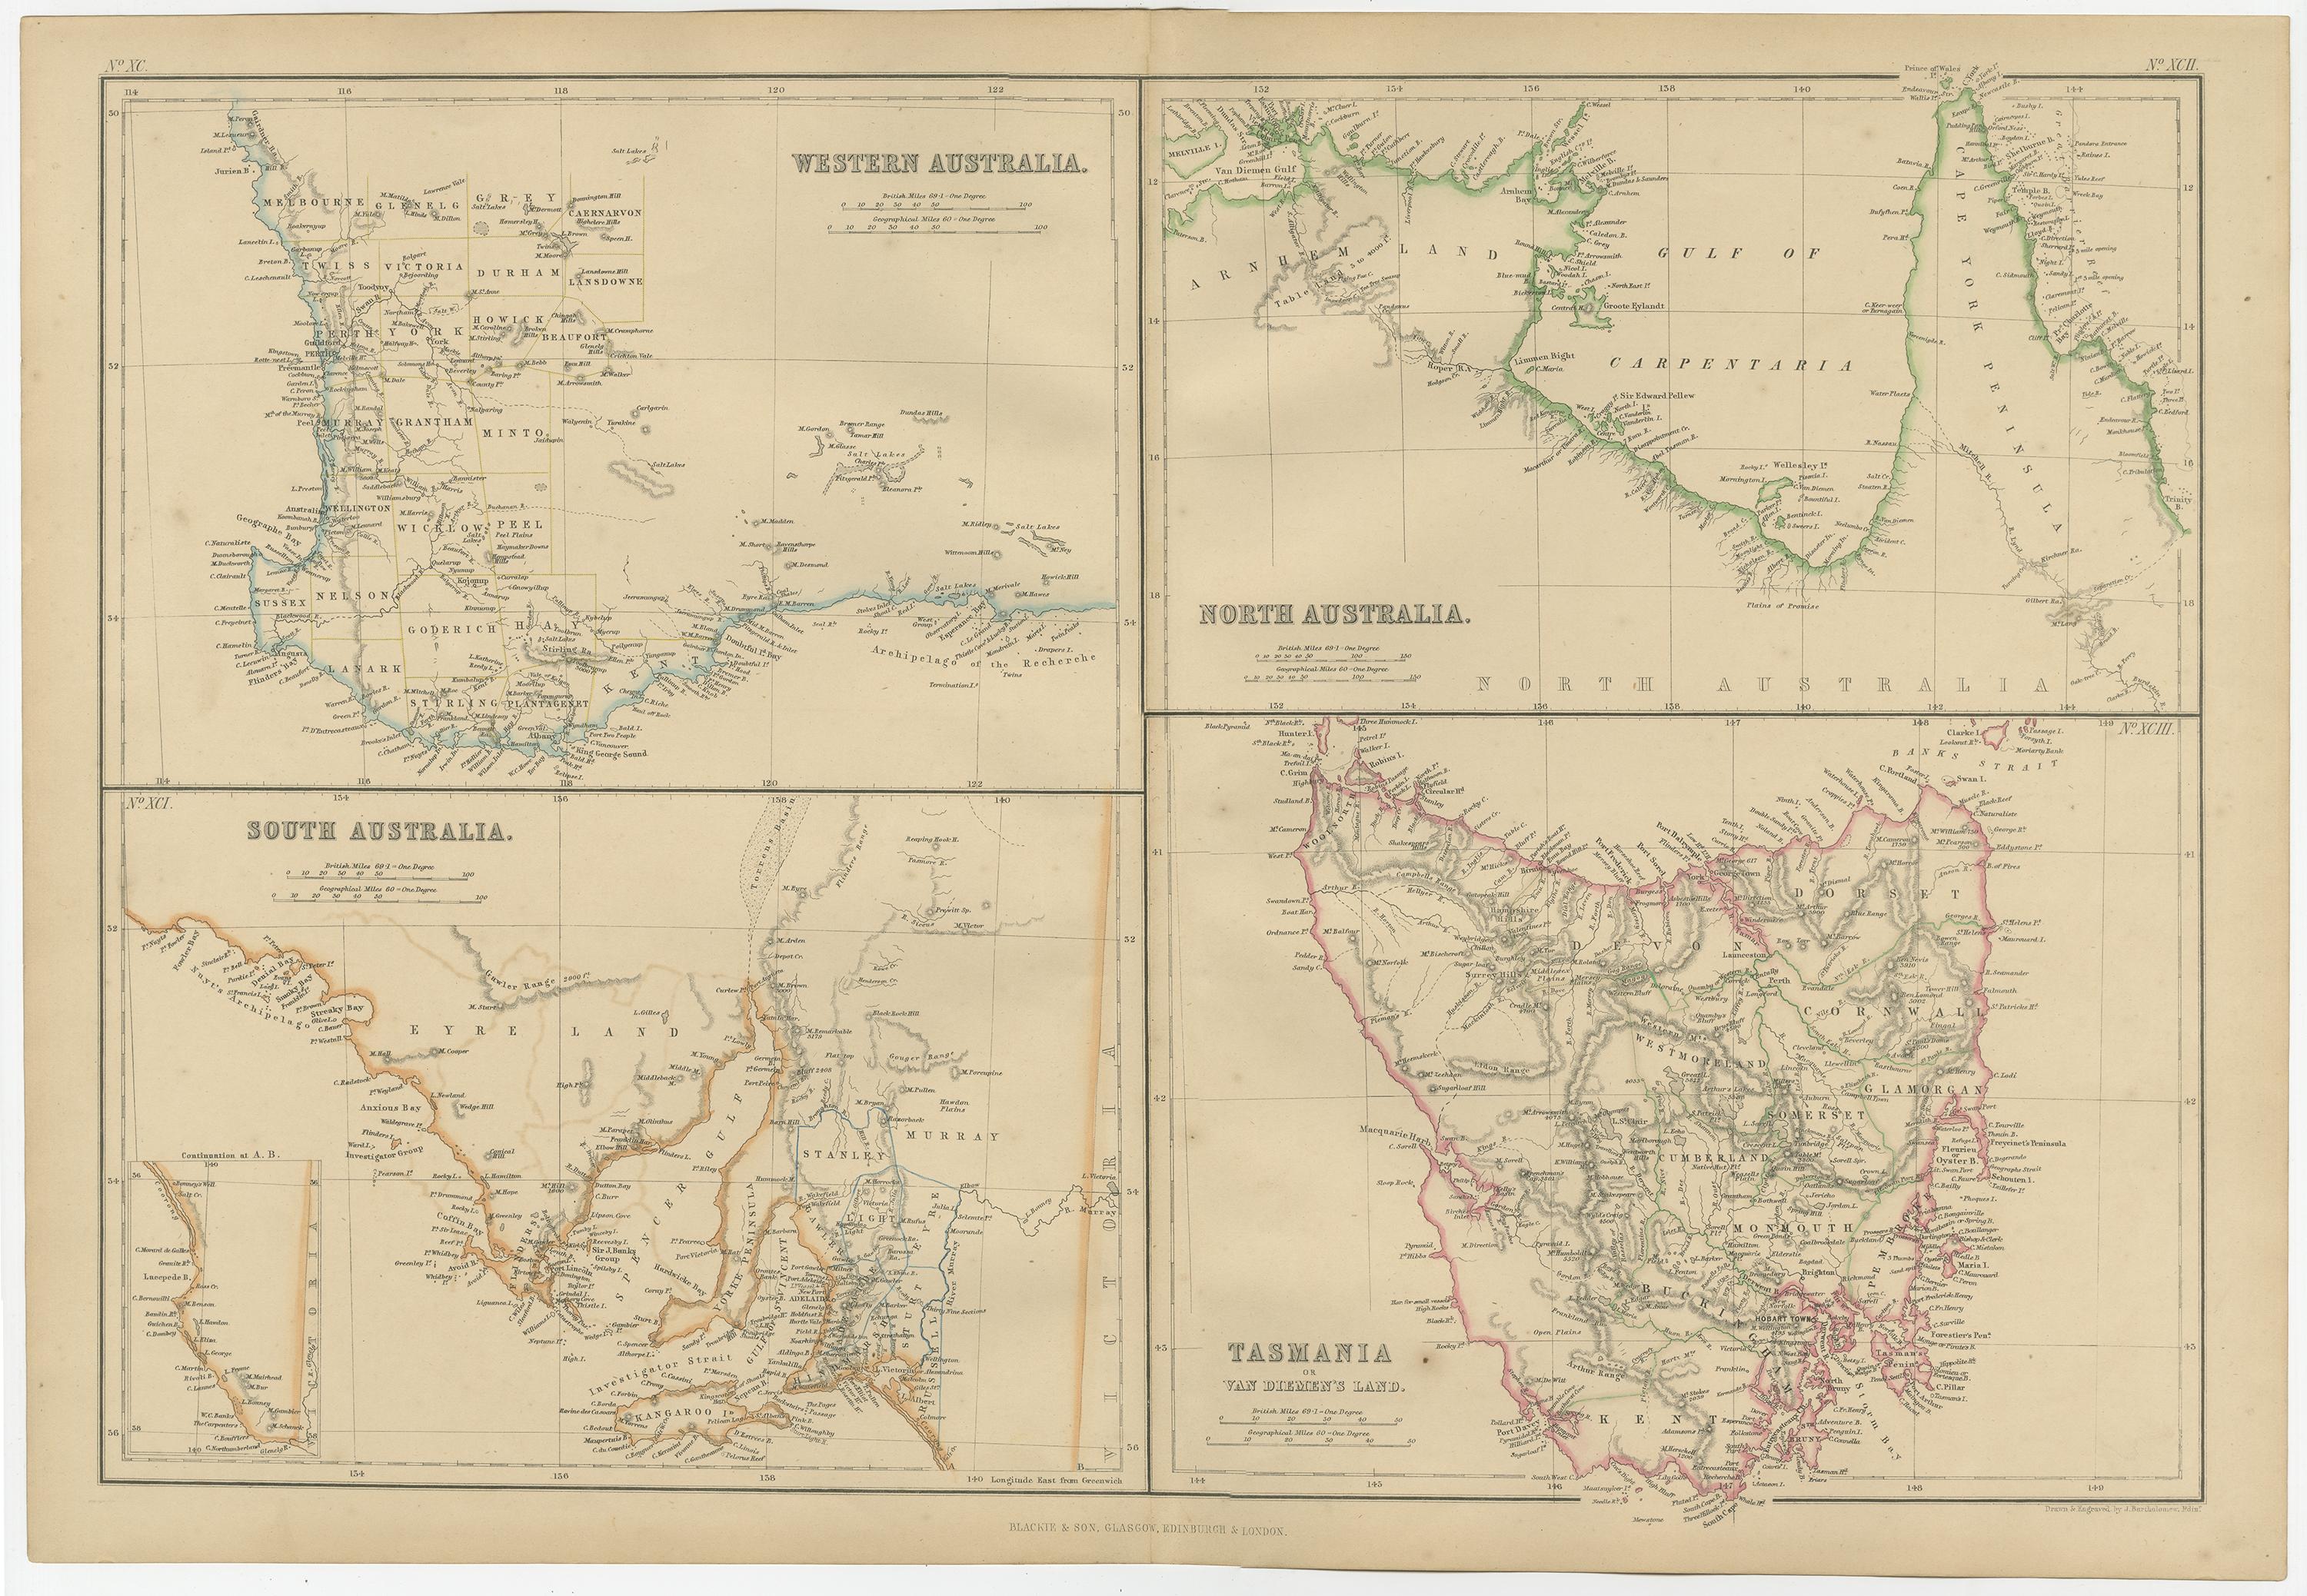 Antique map titled 'Western Australia, South Australia, North Australia and Tasmania'. Original antique map of Western Australia, South Australia, North Australia and Tasmania. This map originates from ‘The Imperial Atlas of Modern Geography’.